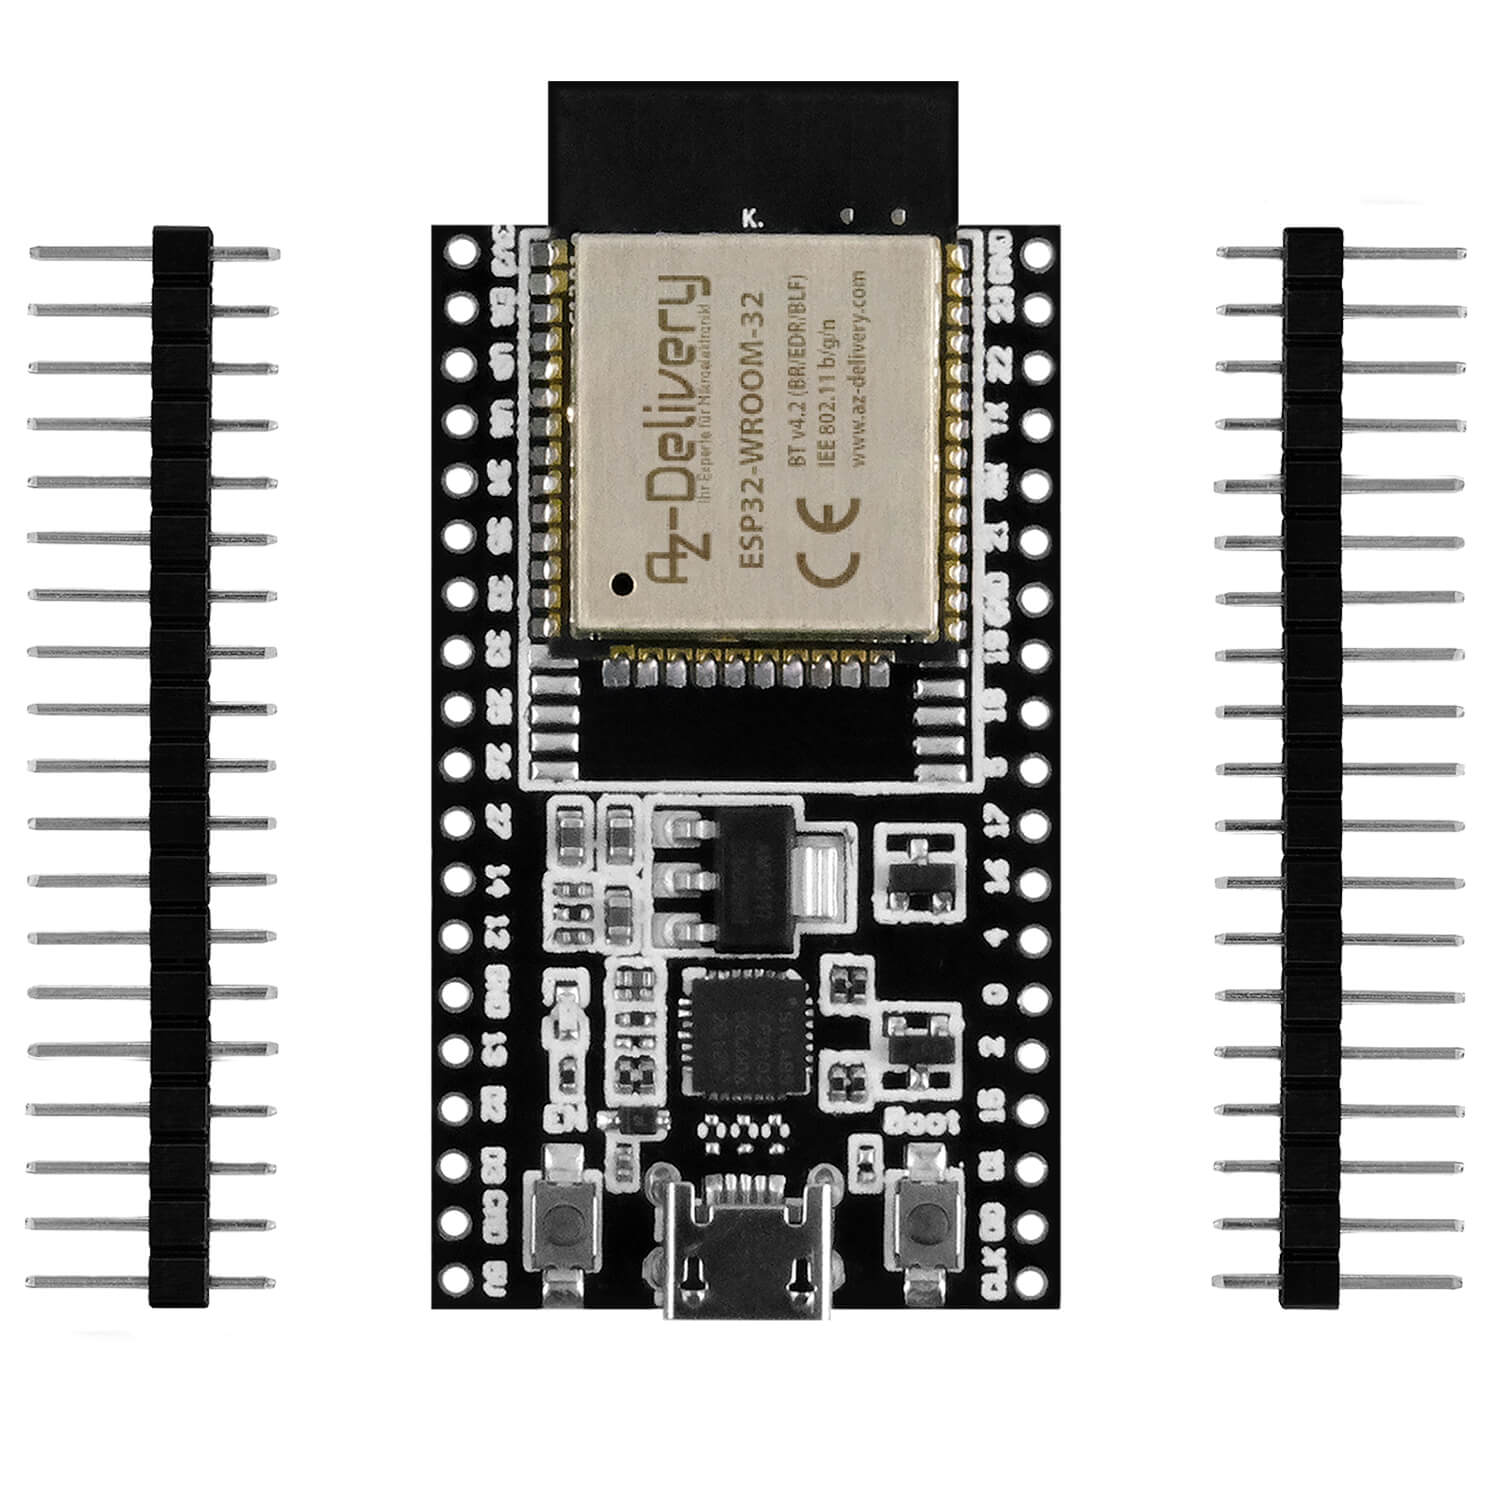 ESP32 Dev Kit C V4 unverlötet kompatibel mit Arduino - AZ-Delivery